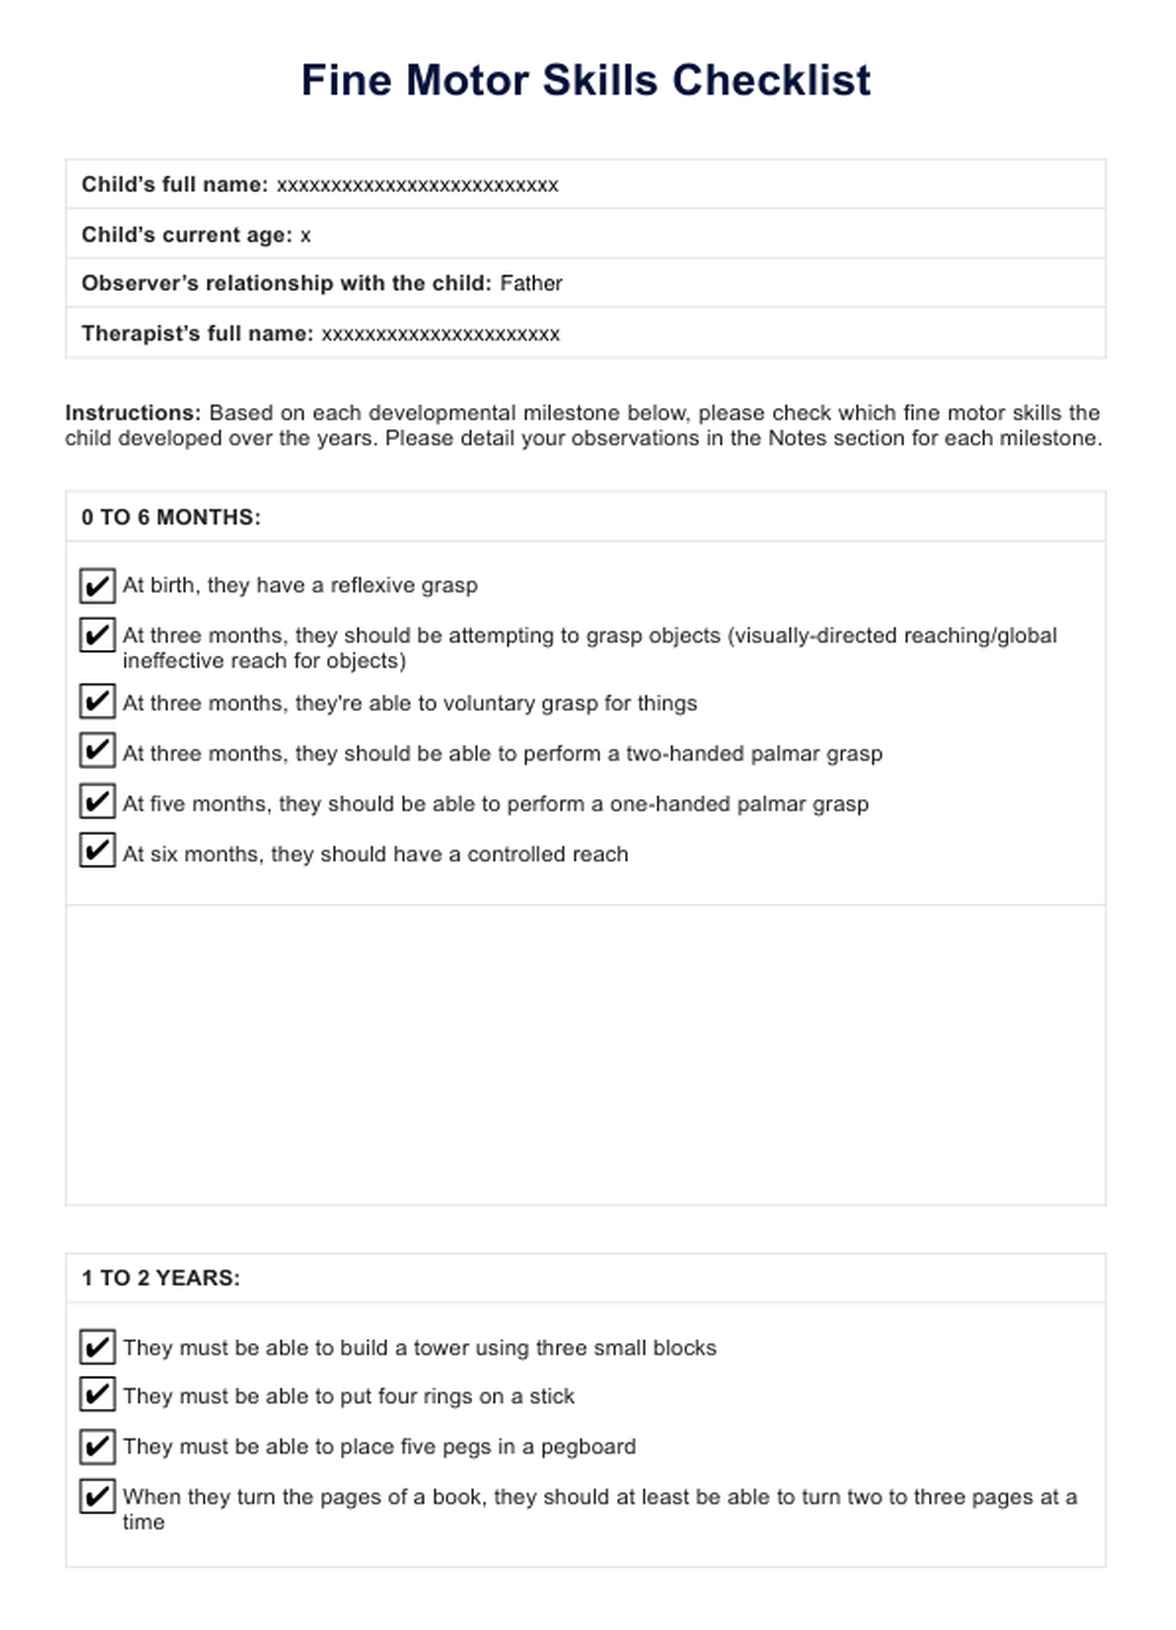 Fine Motor Skills Checklist PDF Example